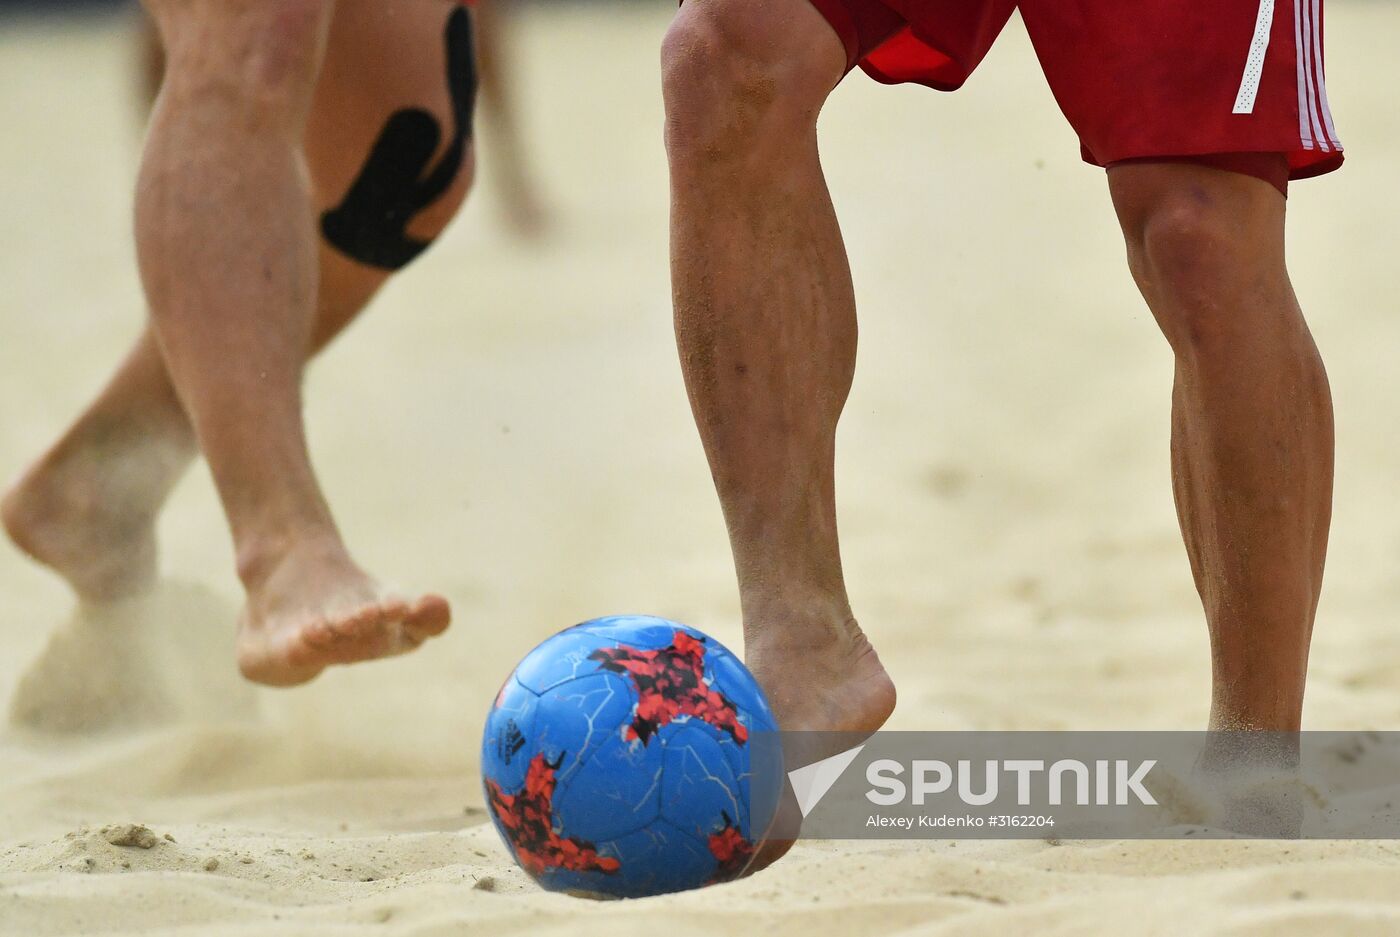 2017 Euro Beach Soccer League. Russia vs. Belarus